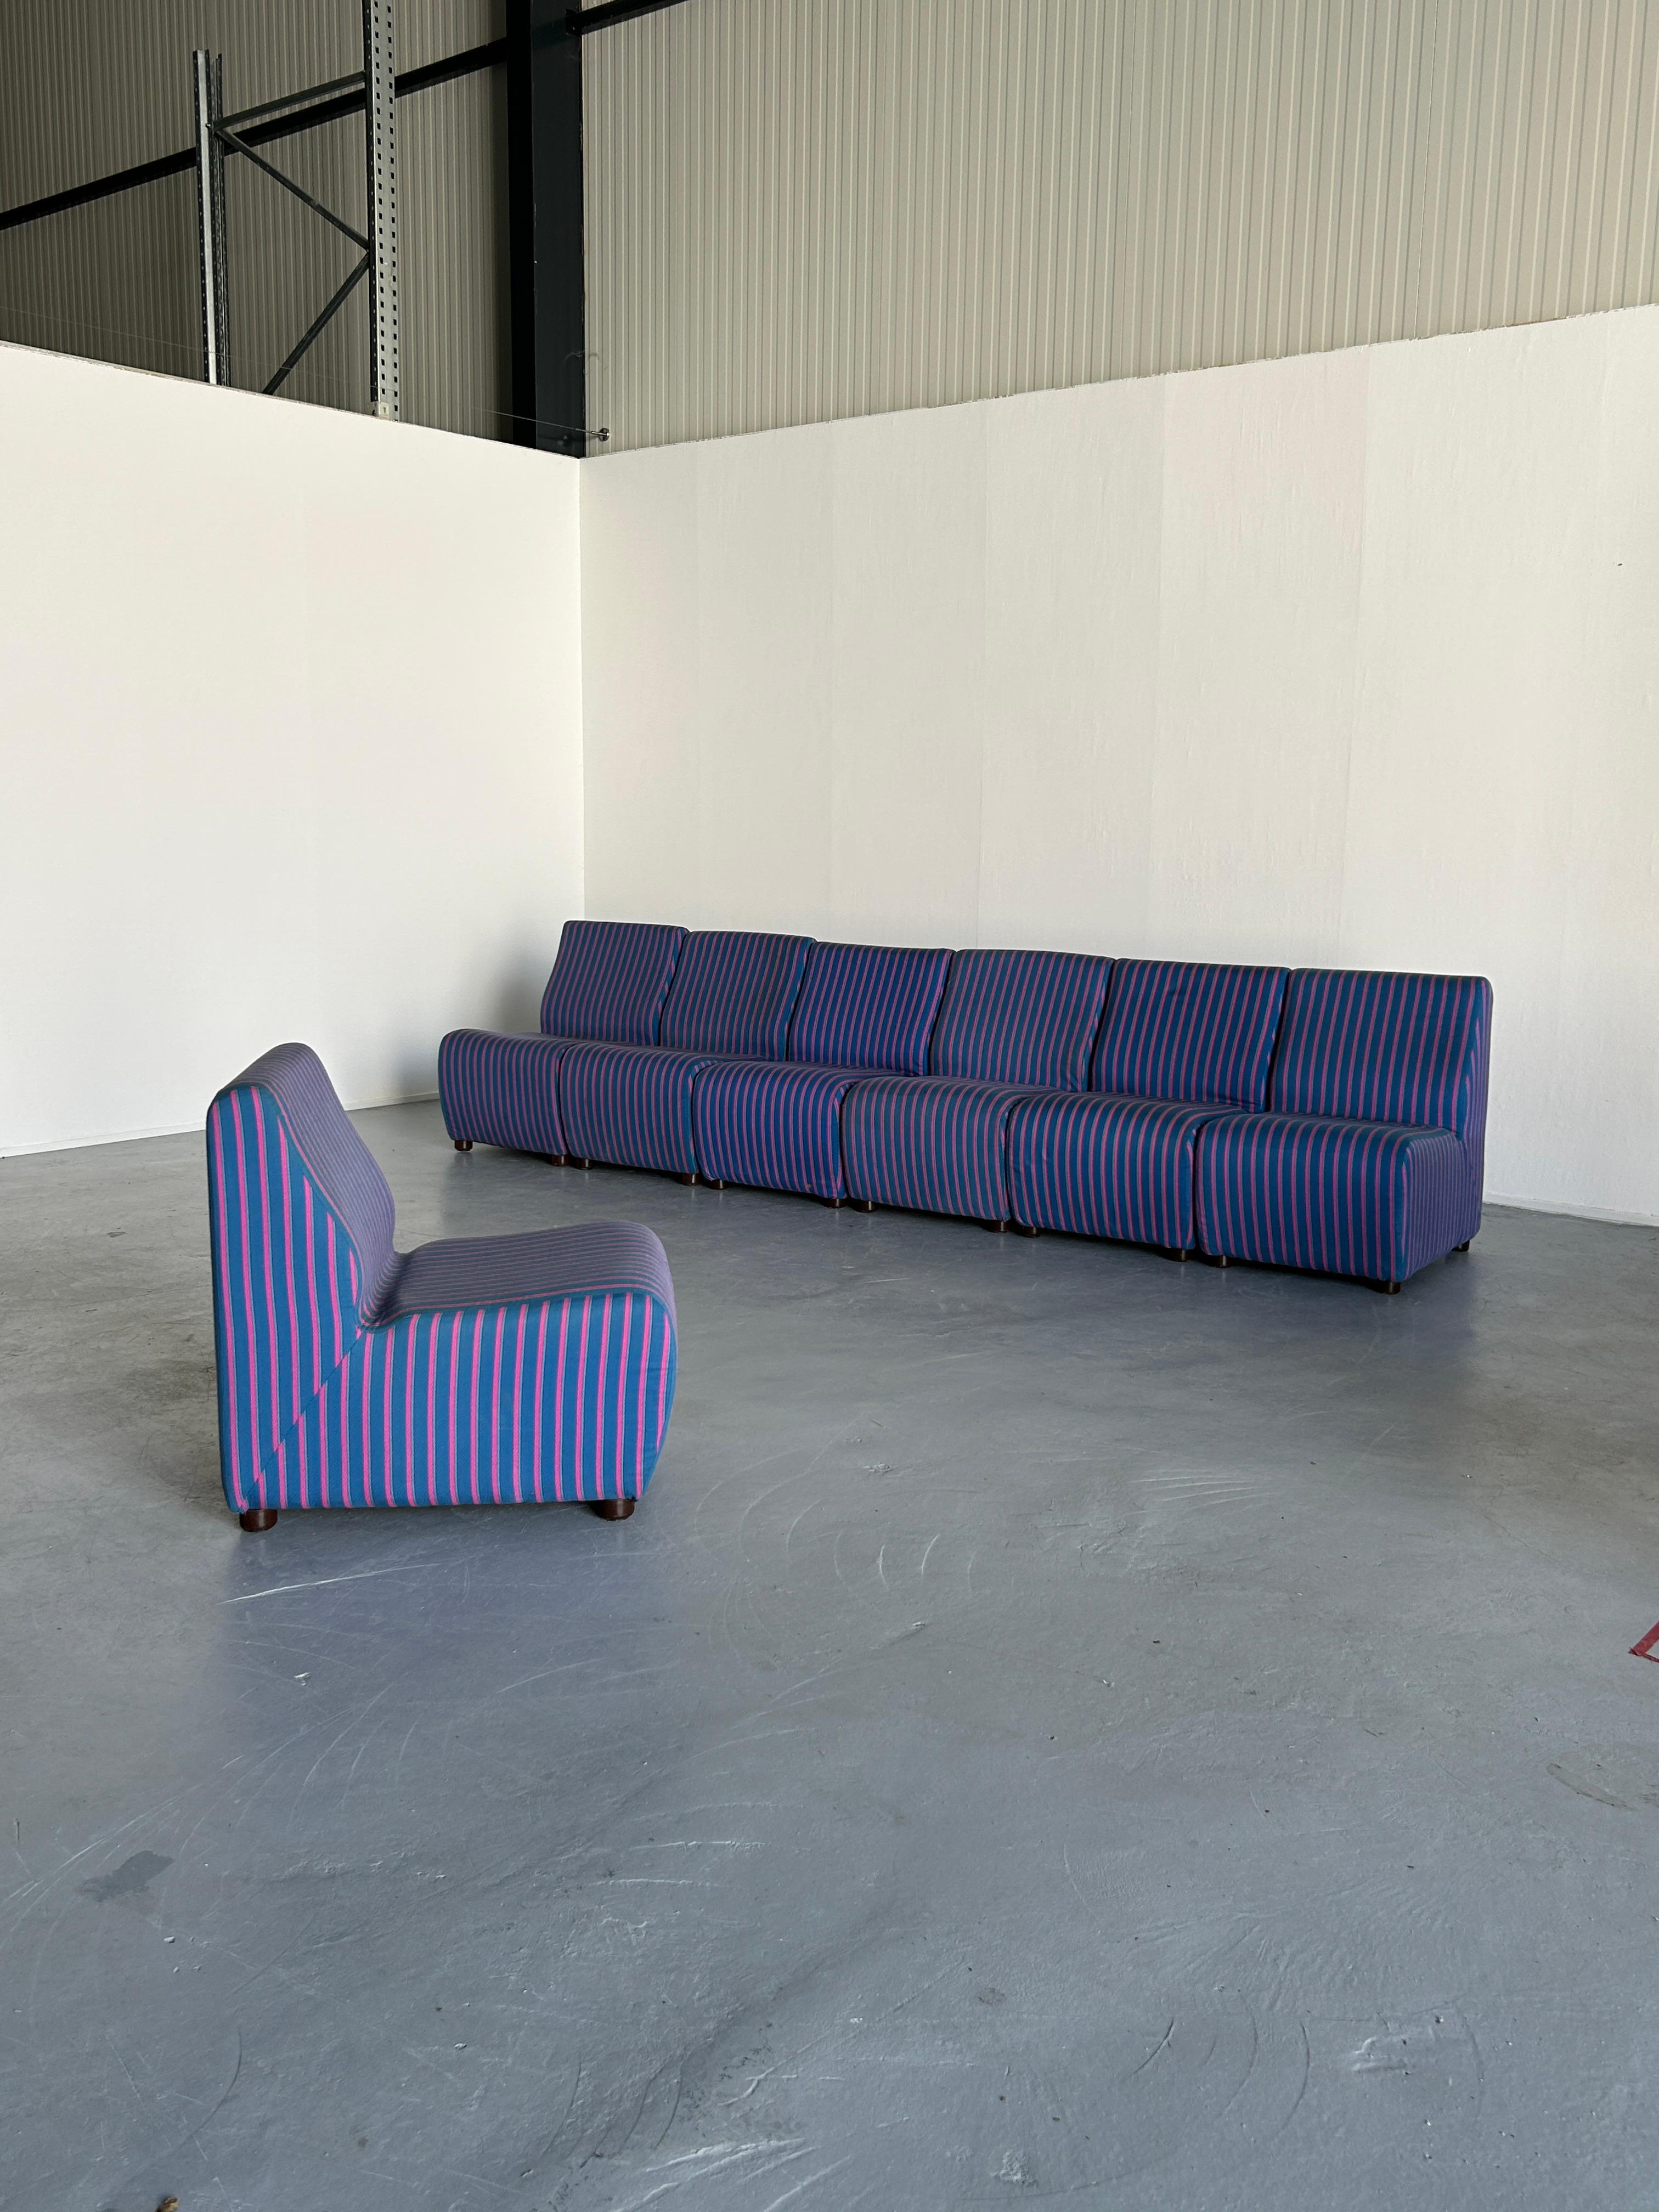 Late 20th Century Italian Mid-Century-Modern Modular Sofa Modules in Blue Striped Upholstery, 70s